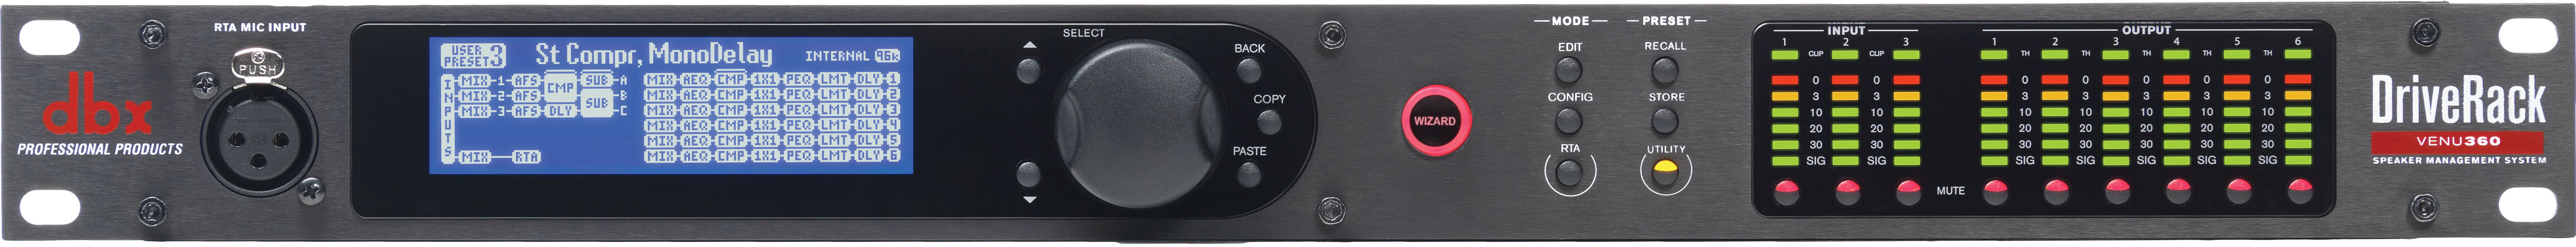 dbx Introduces DriveRack VENU360 Loudspeaker Management System With Mobile Device Control at NAMM 2015